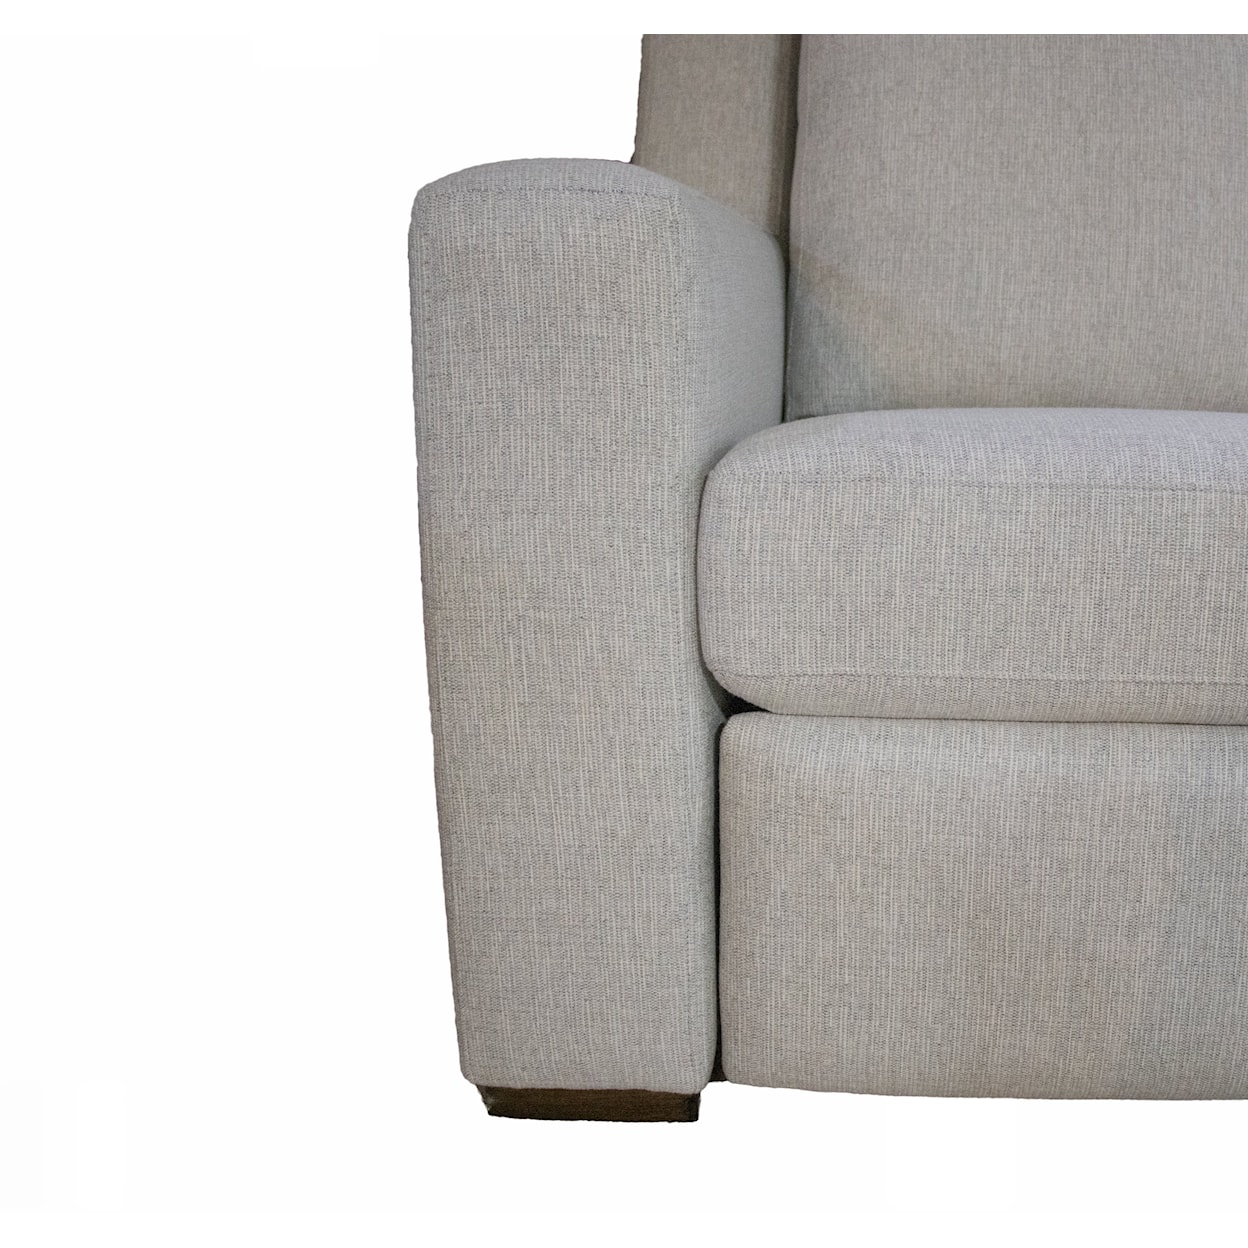 Bassett BenchMade Motion-Somers 2900 Power Reclining Sofa